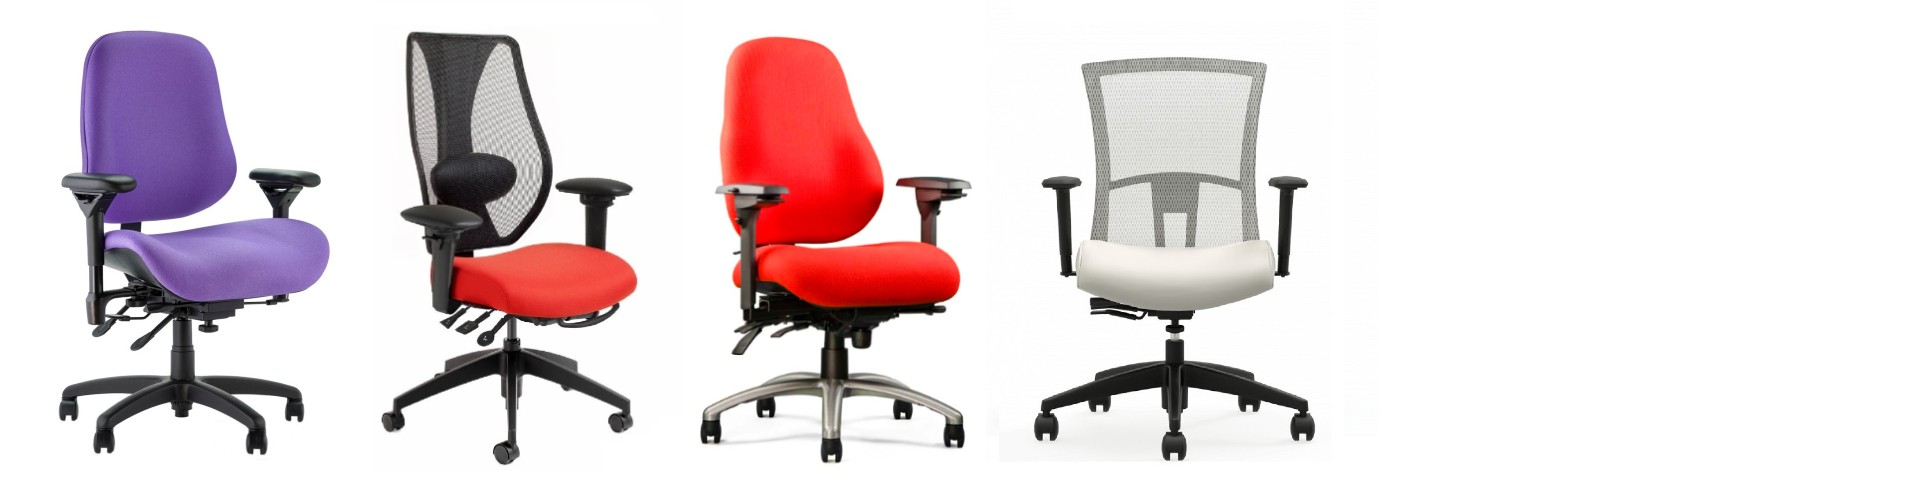 Ergonomic Chairs, Accessories | Advanced Ergonomic Concepts